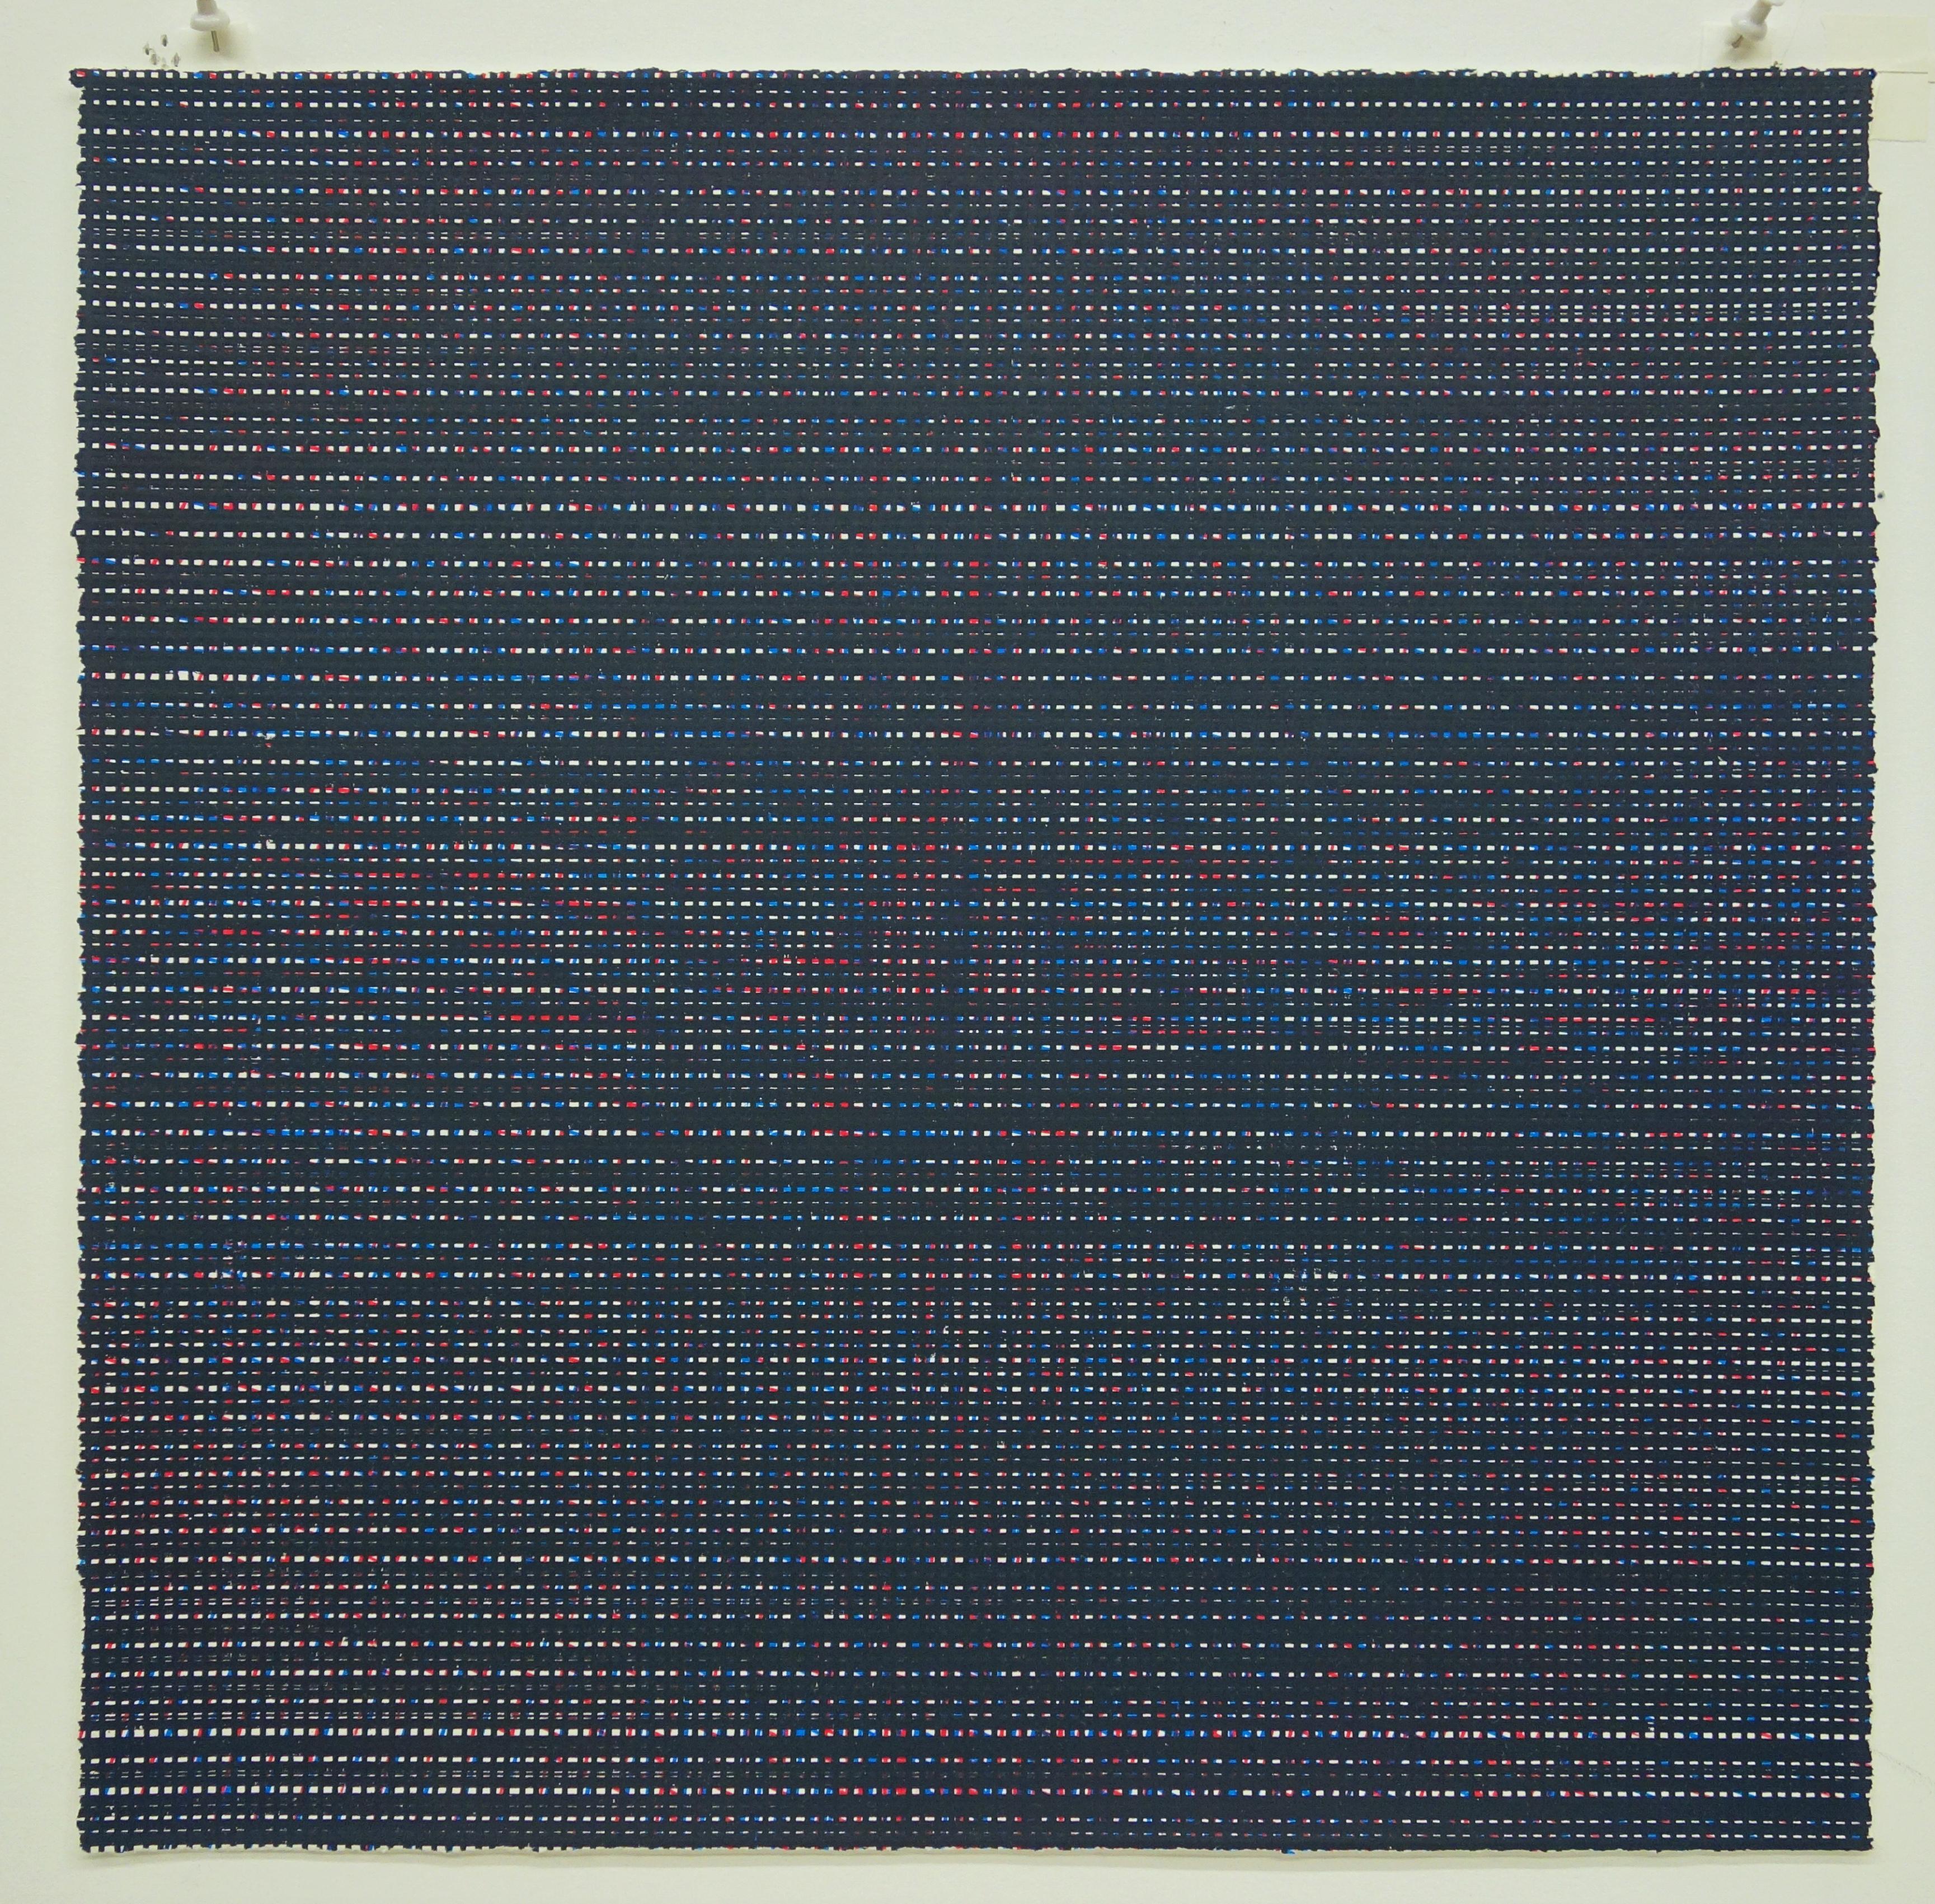 Rob de Oude, Untitled-Wassaic 1, 2016, silkscreen, 18 x 18 inches, Suite of 10 5